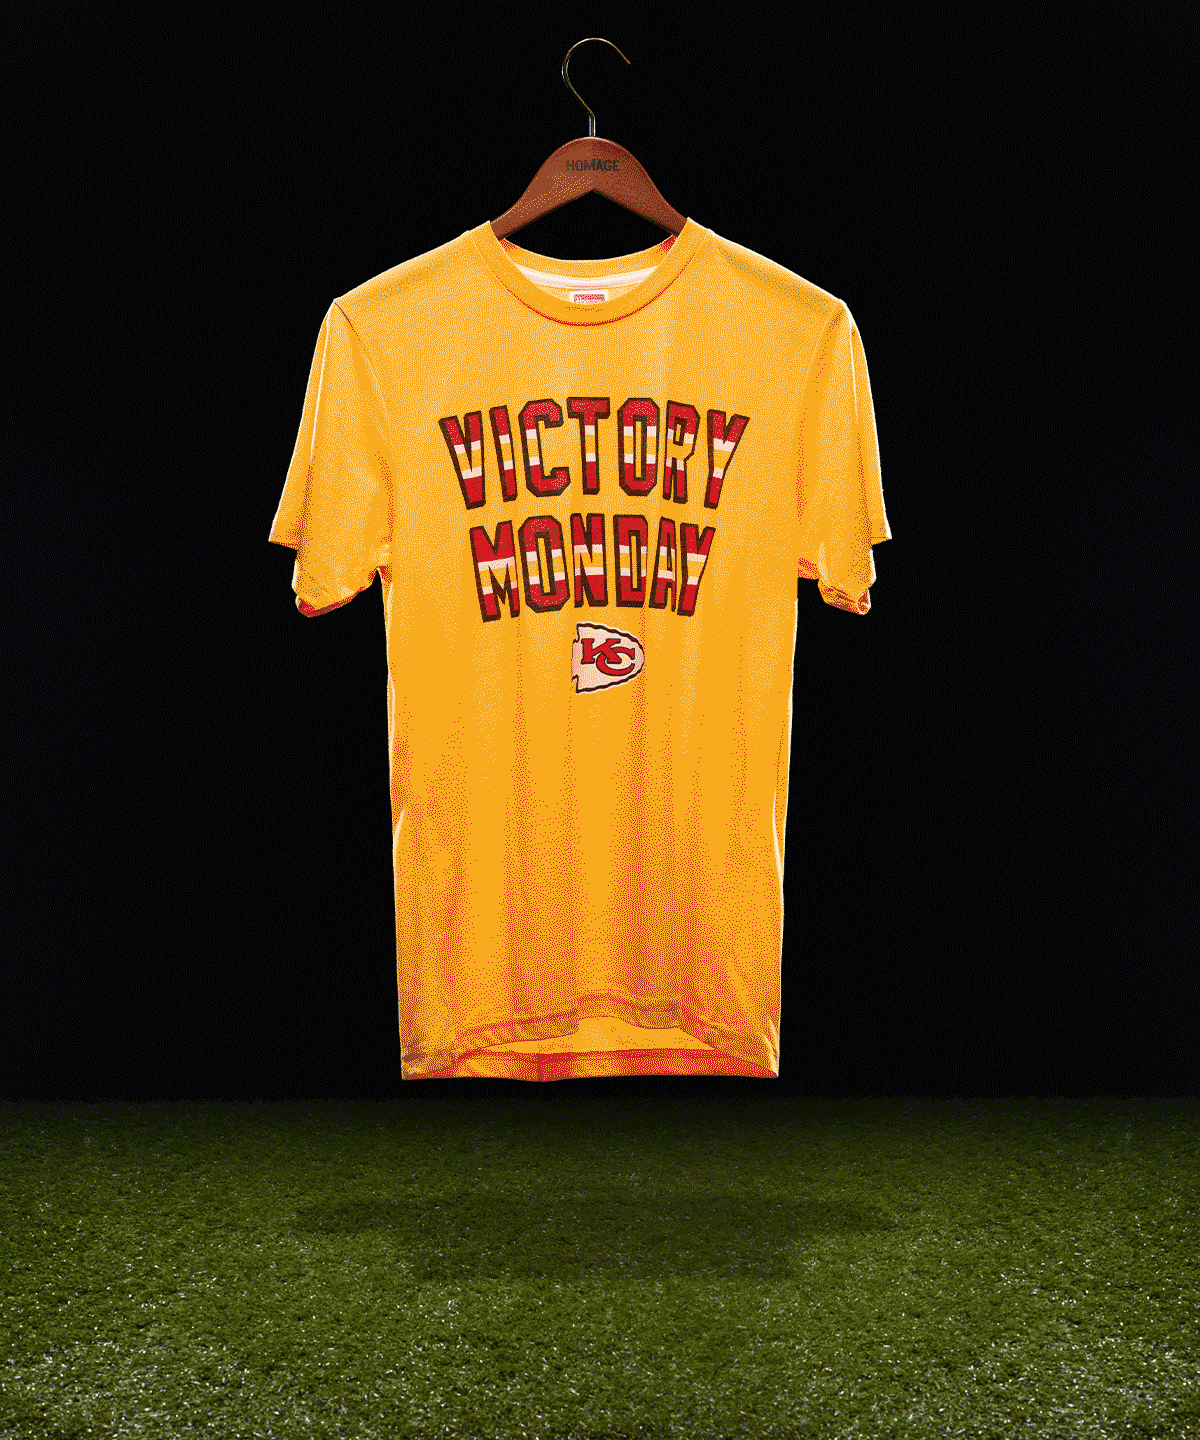 Guy Fieri, Homage Create T-Shirts Celebrating NFL Teams